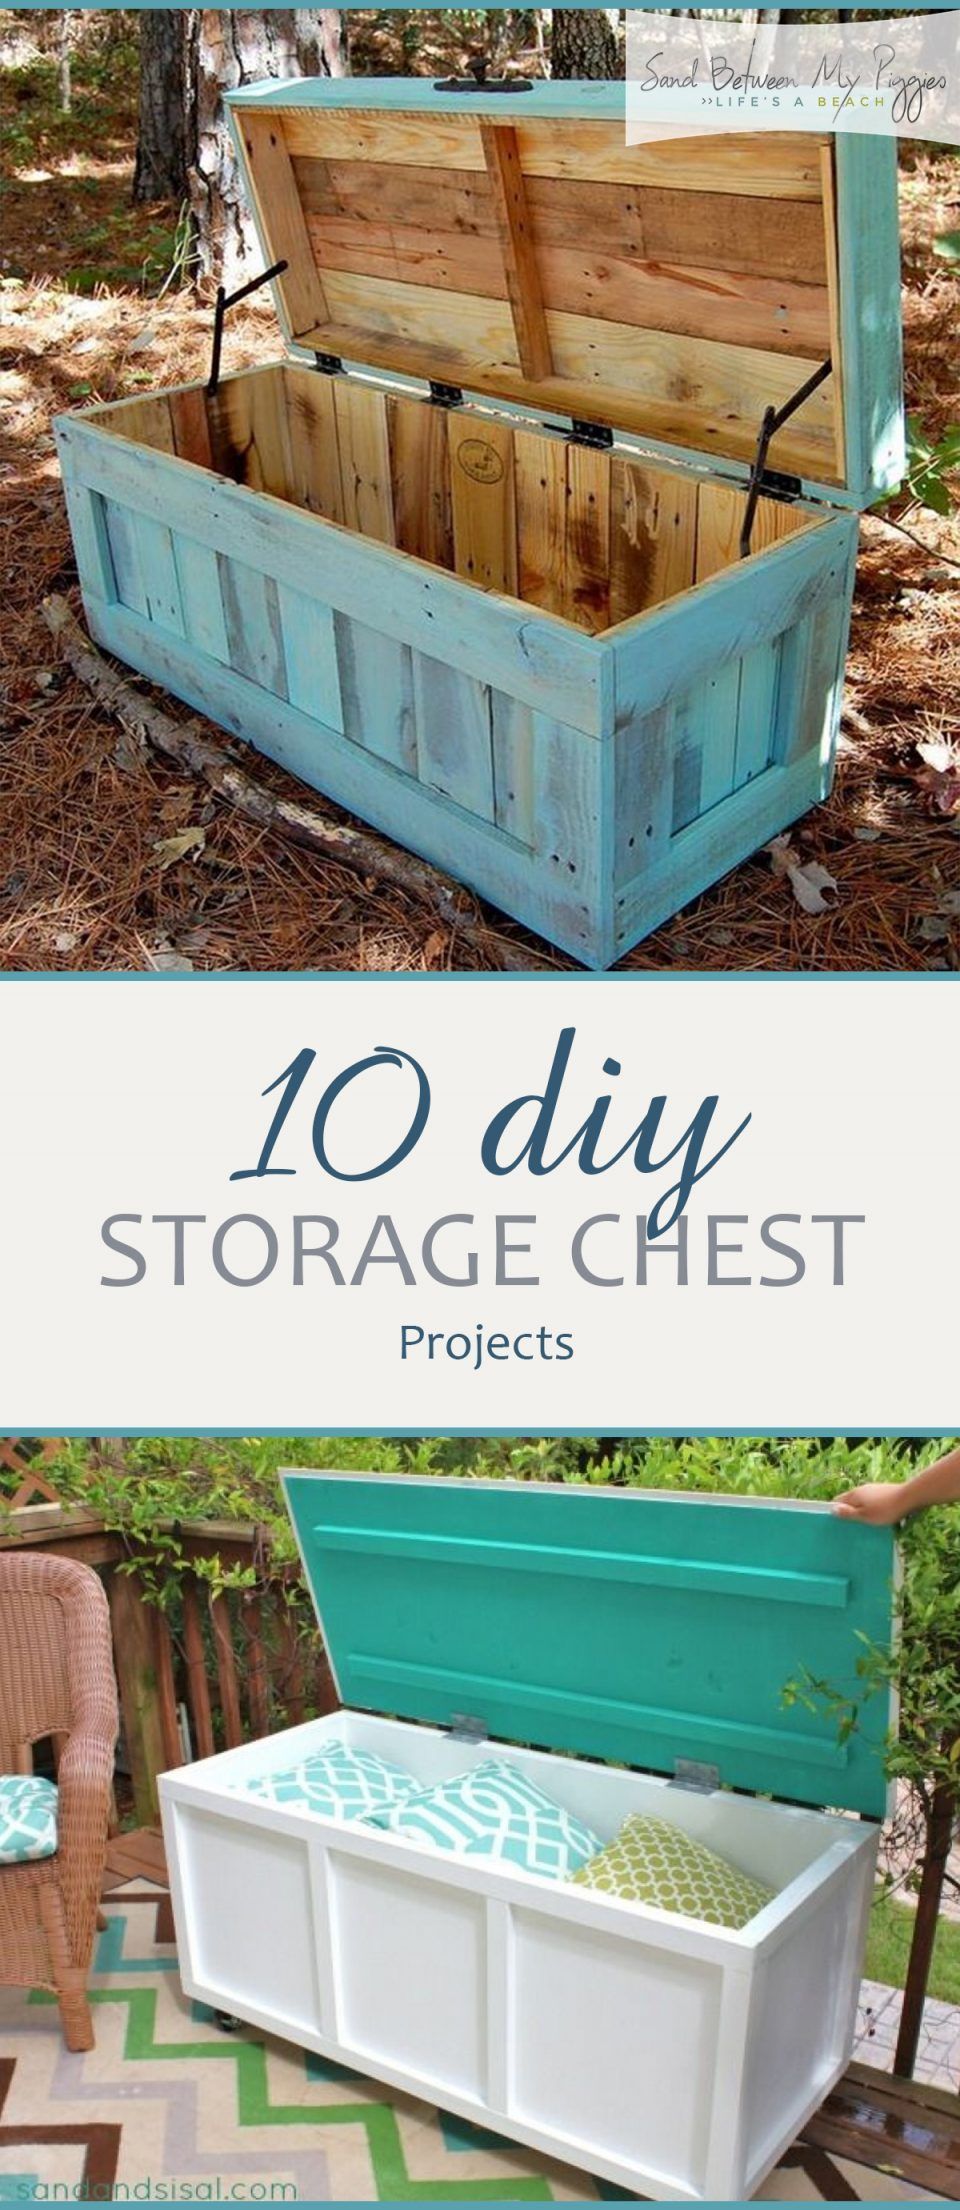 16 diy Wood chest ideas